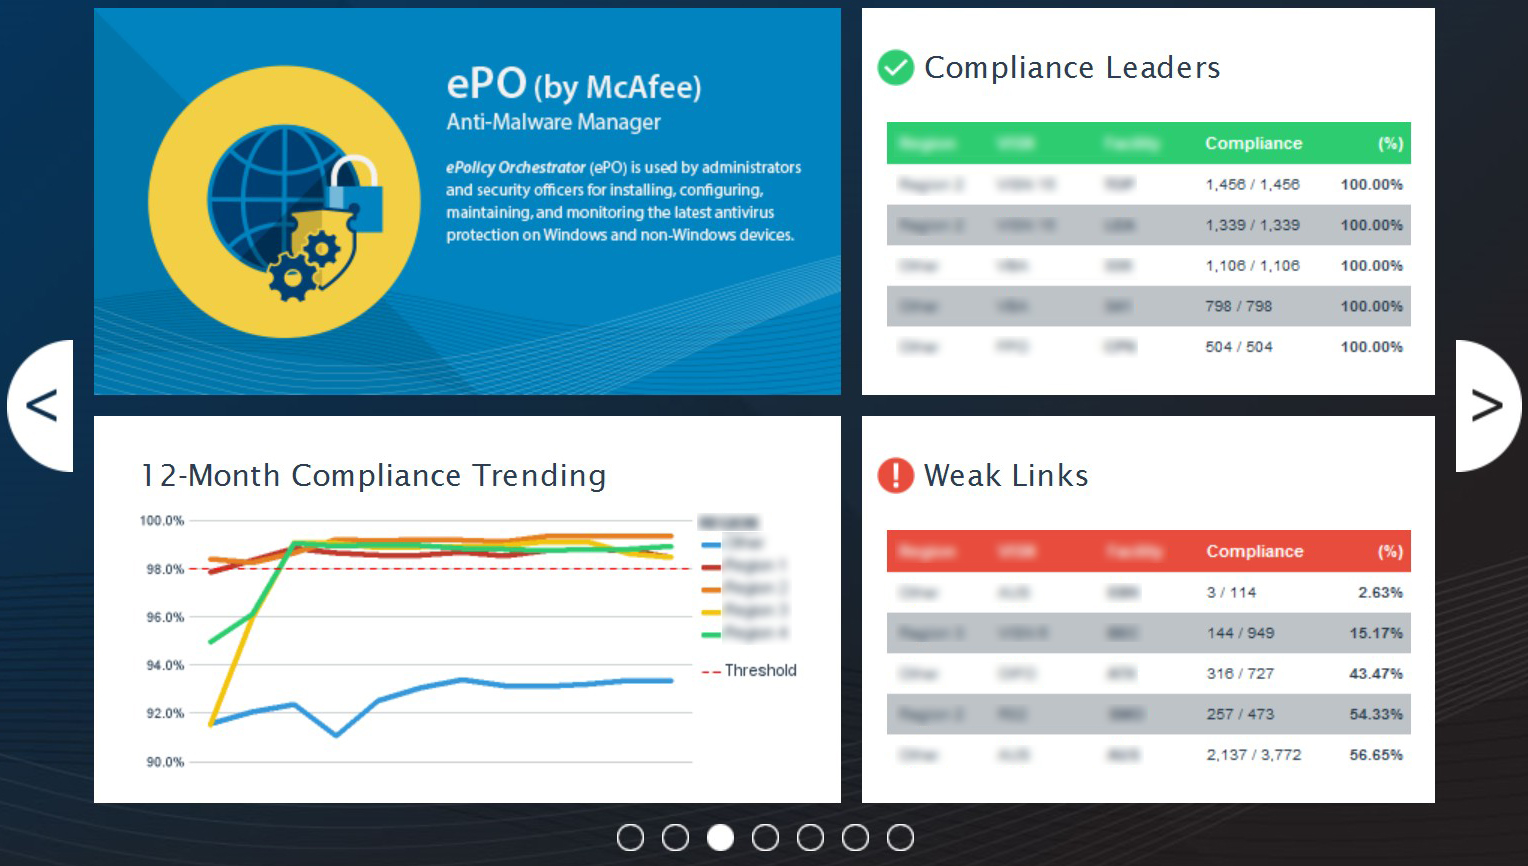 ePO Compliance status image in carousel